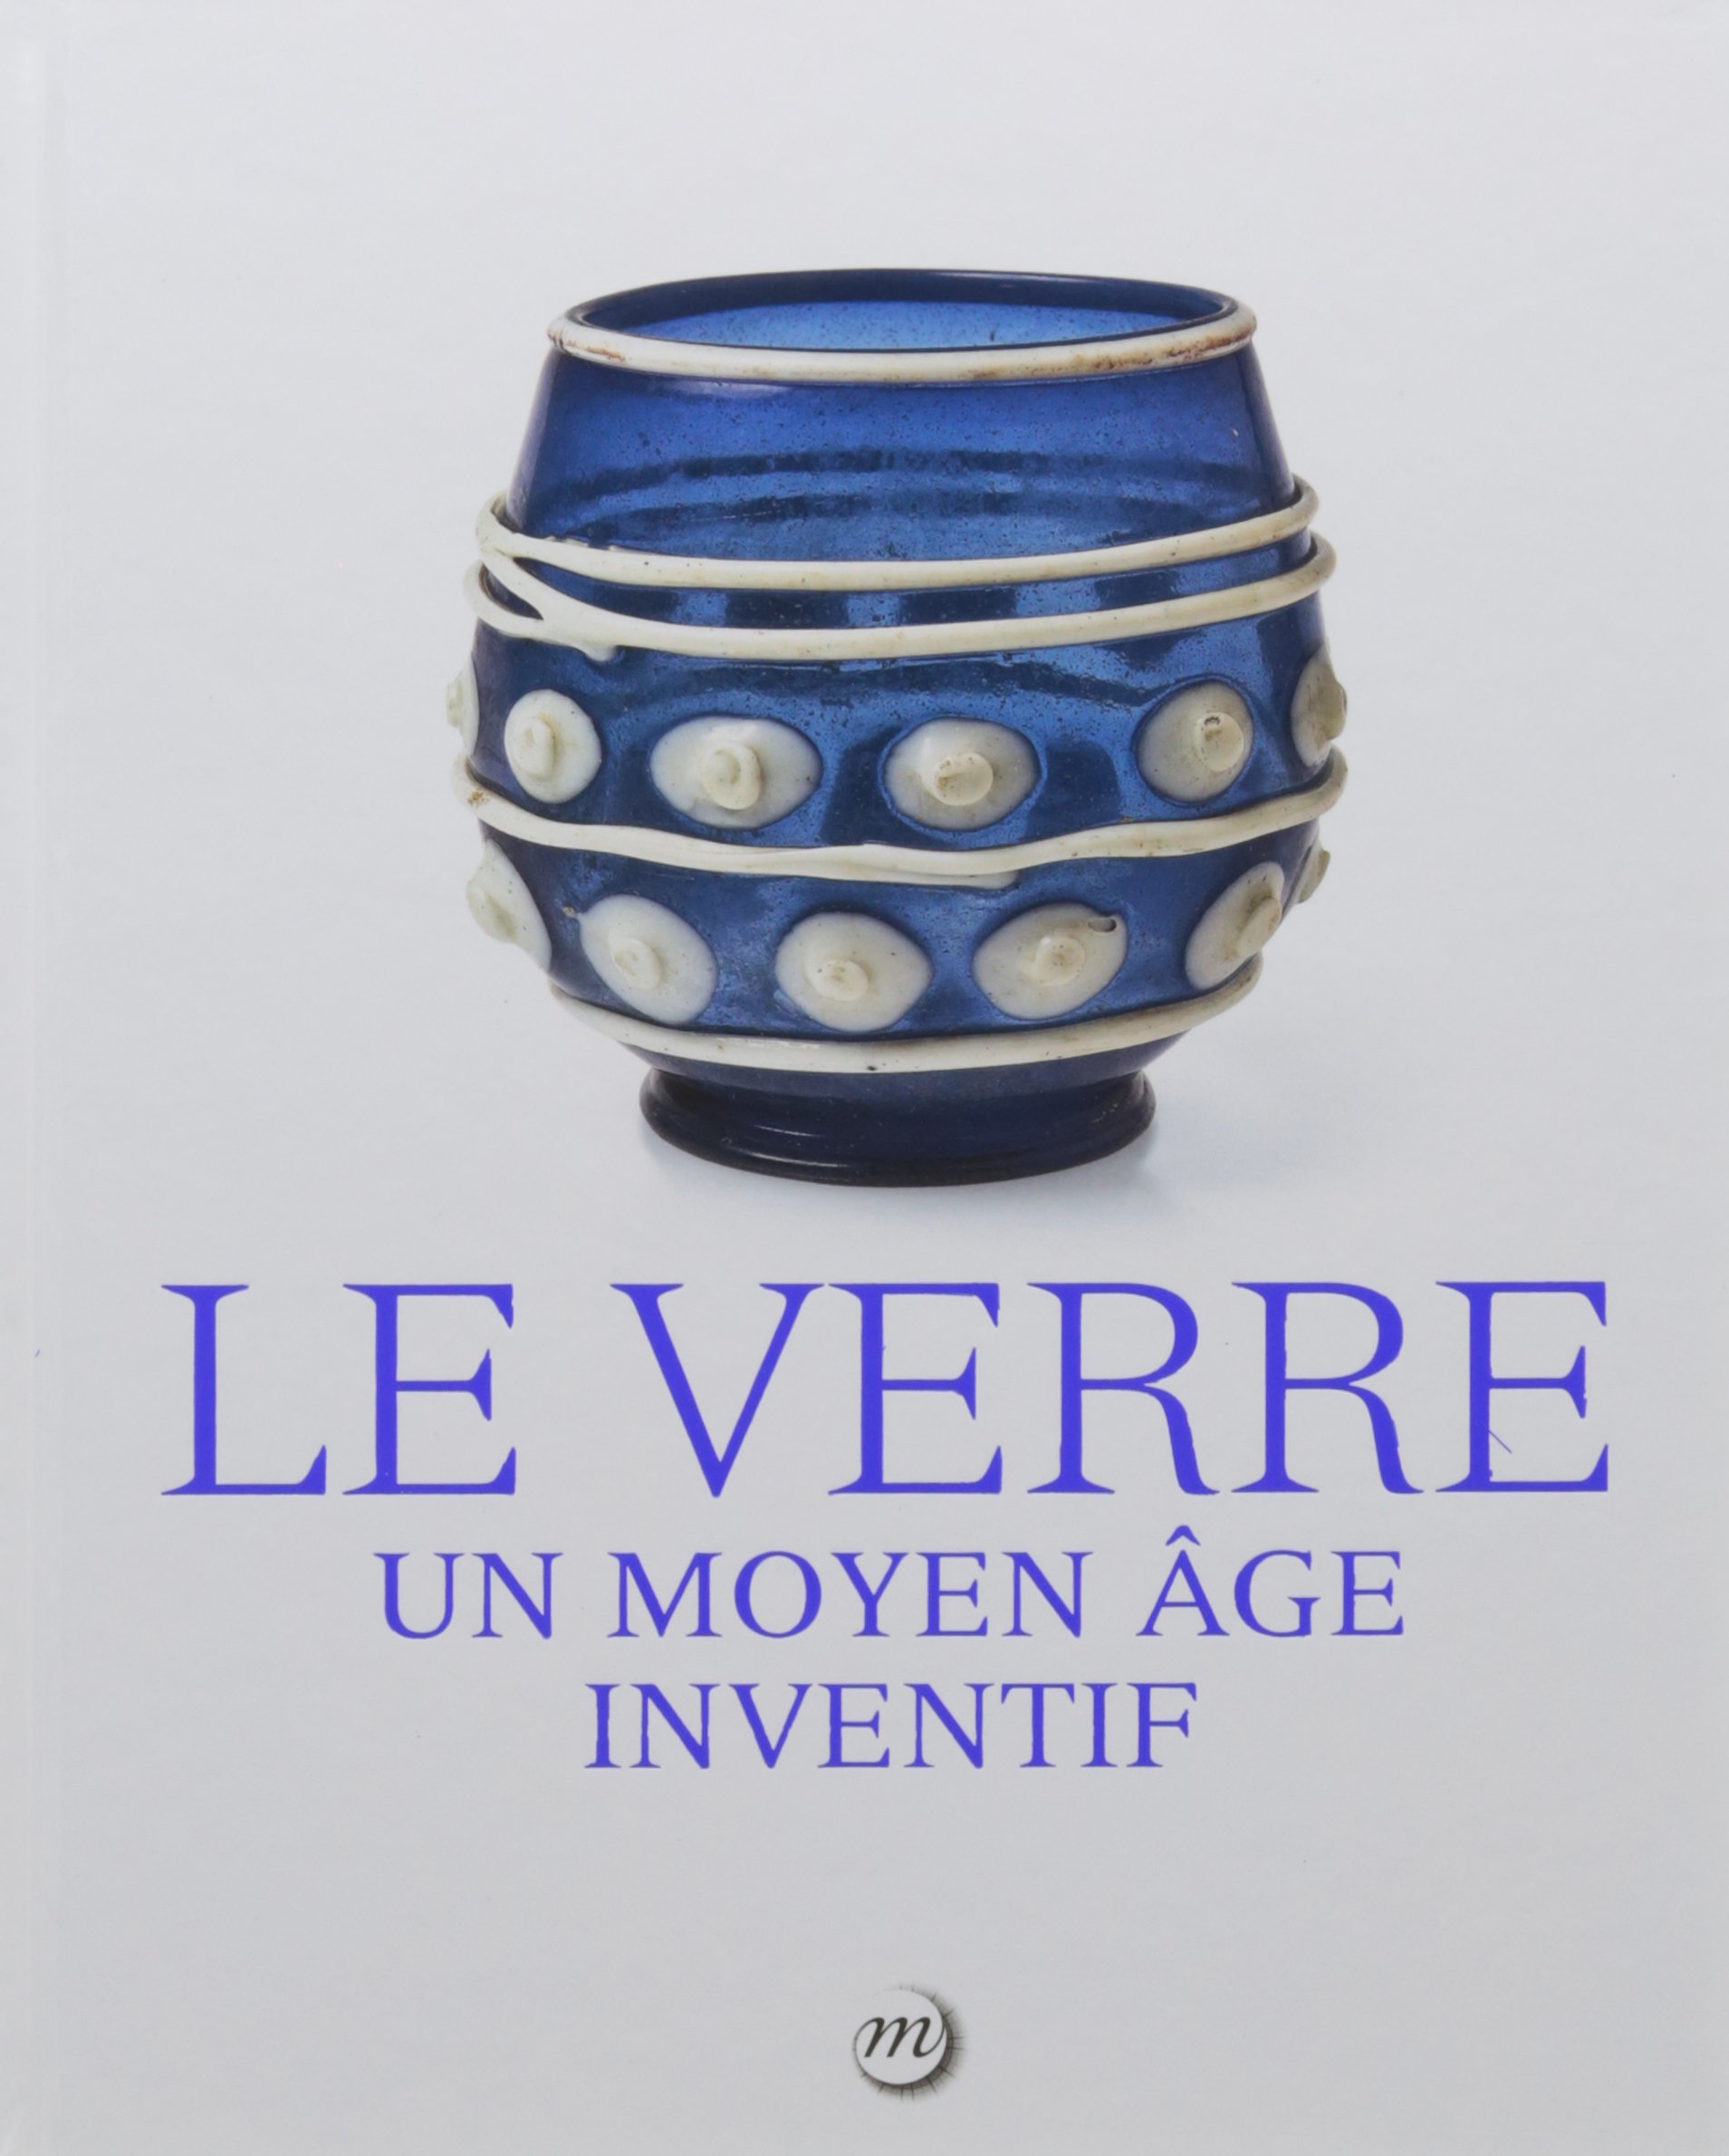 Le verre. Un Moyen Age inventif, 2017, 256 p.